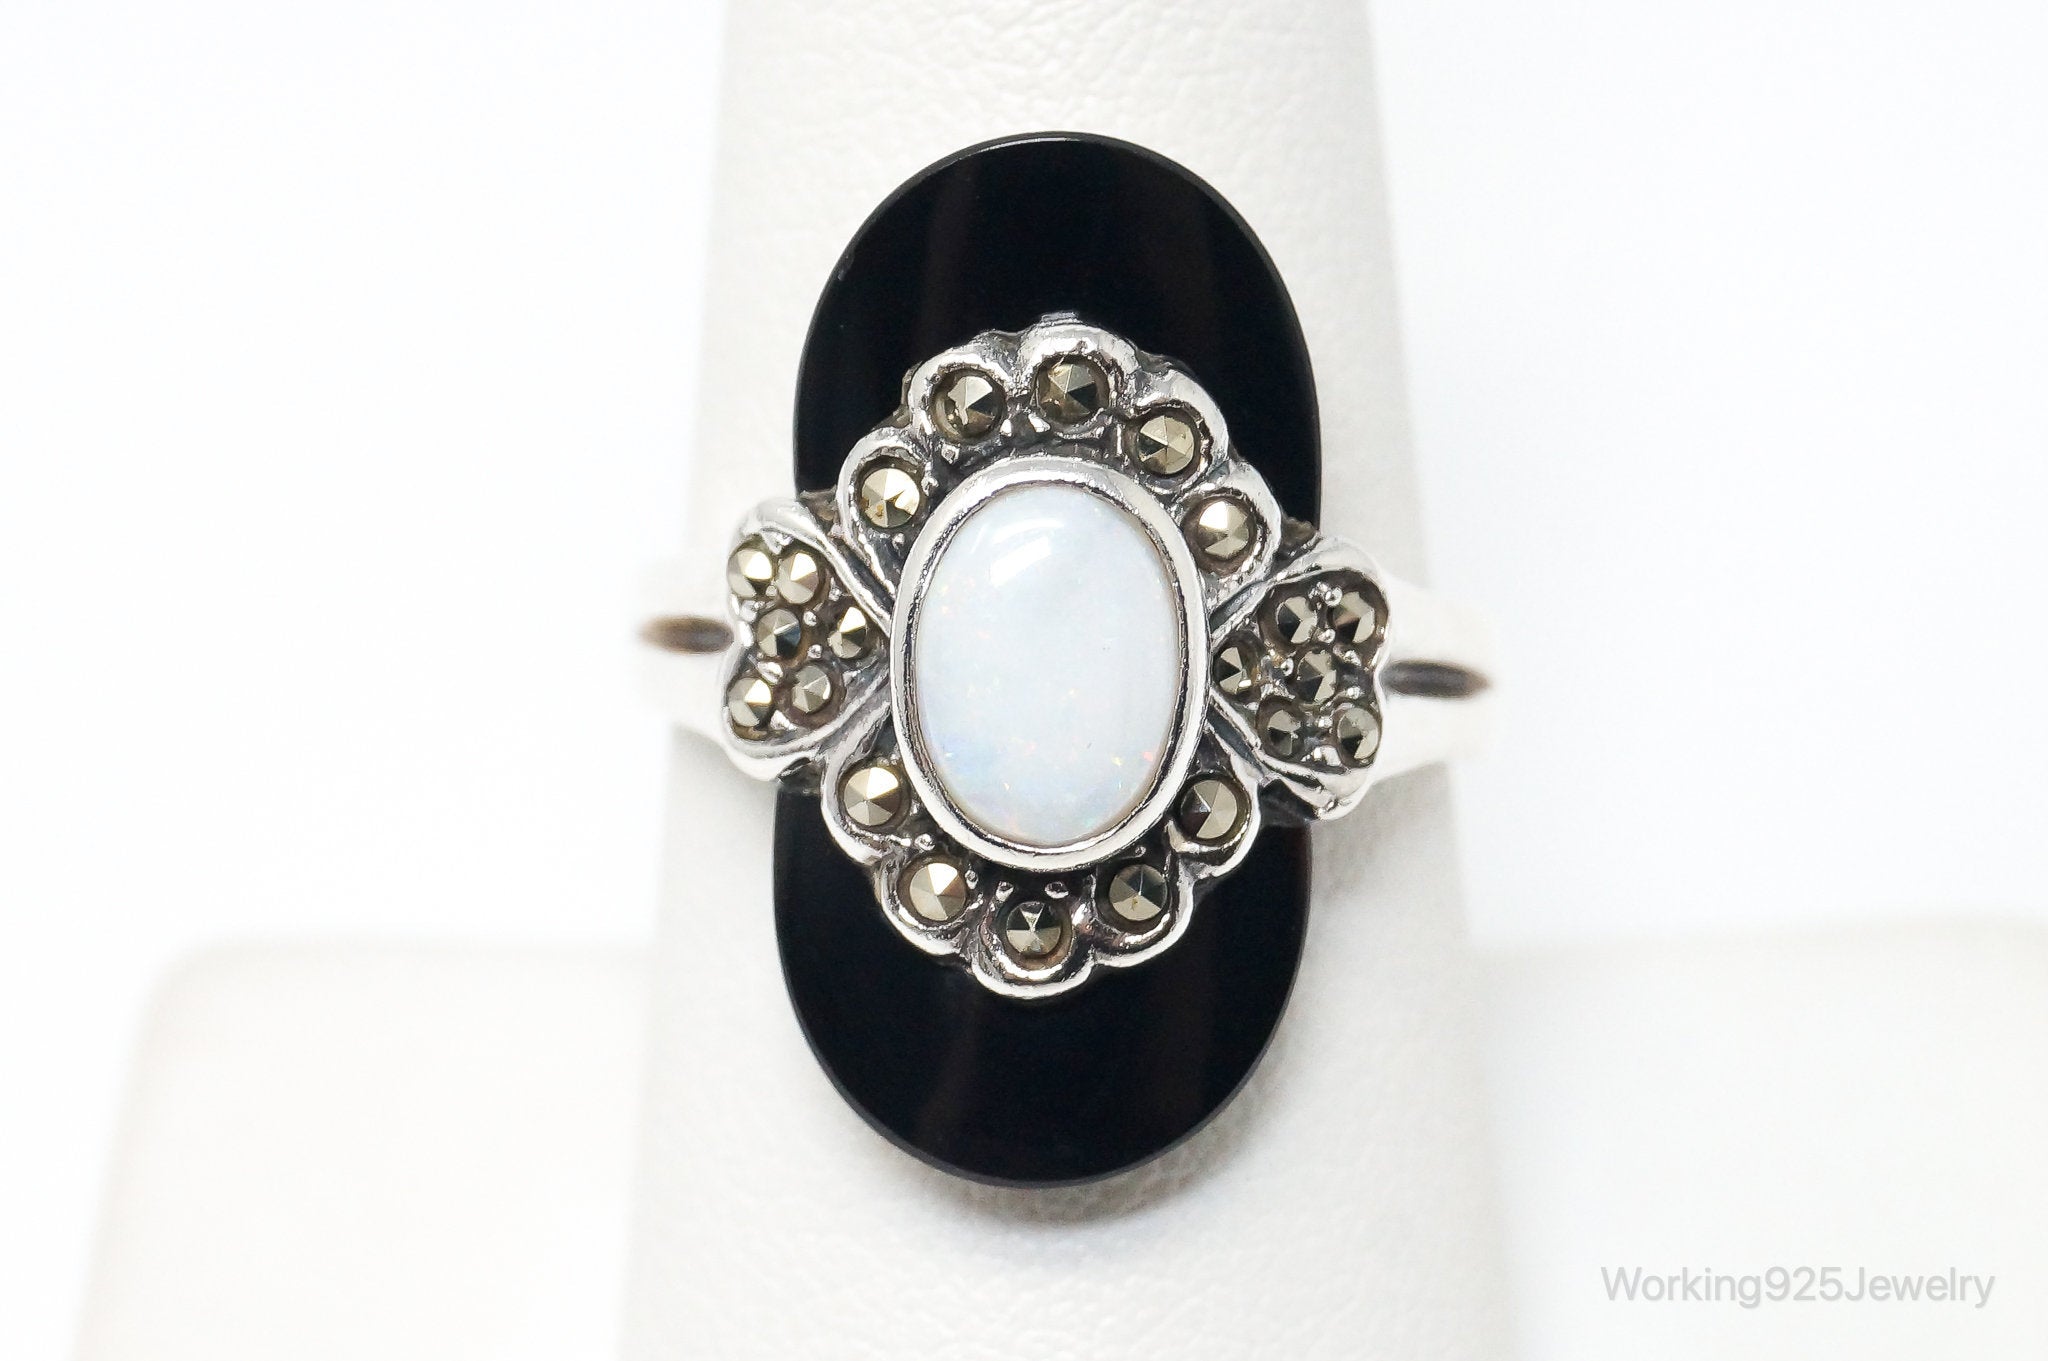 Designer Chapal-Zenray Opal Black Onyx Marcasite Sterling Silver Ring SZ 8